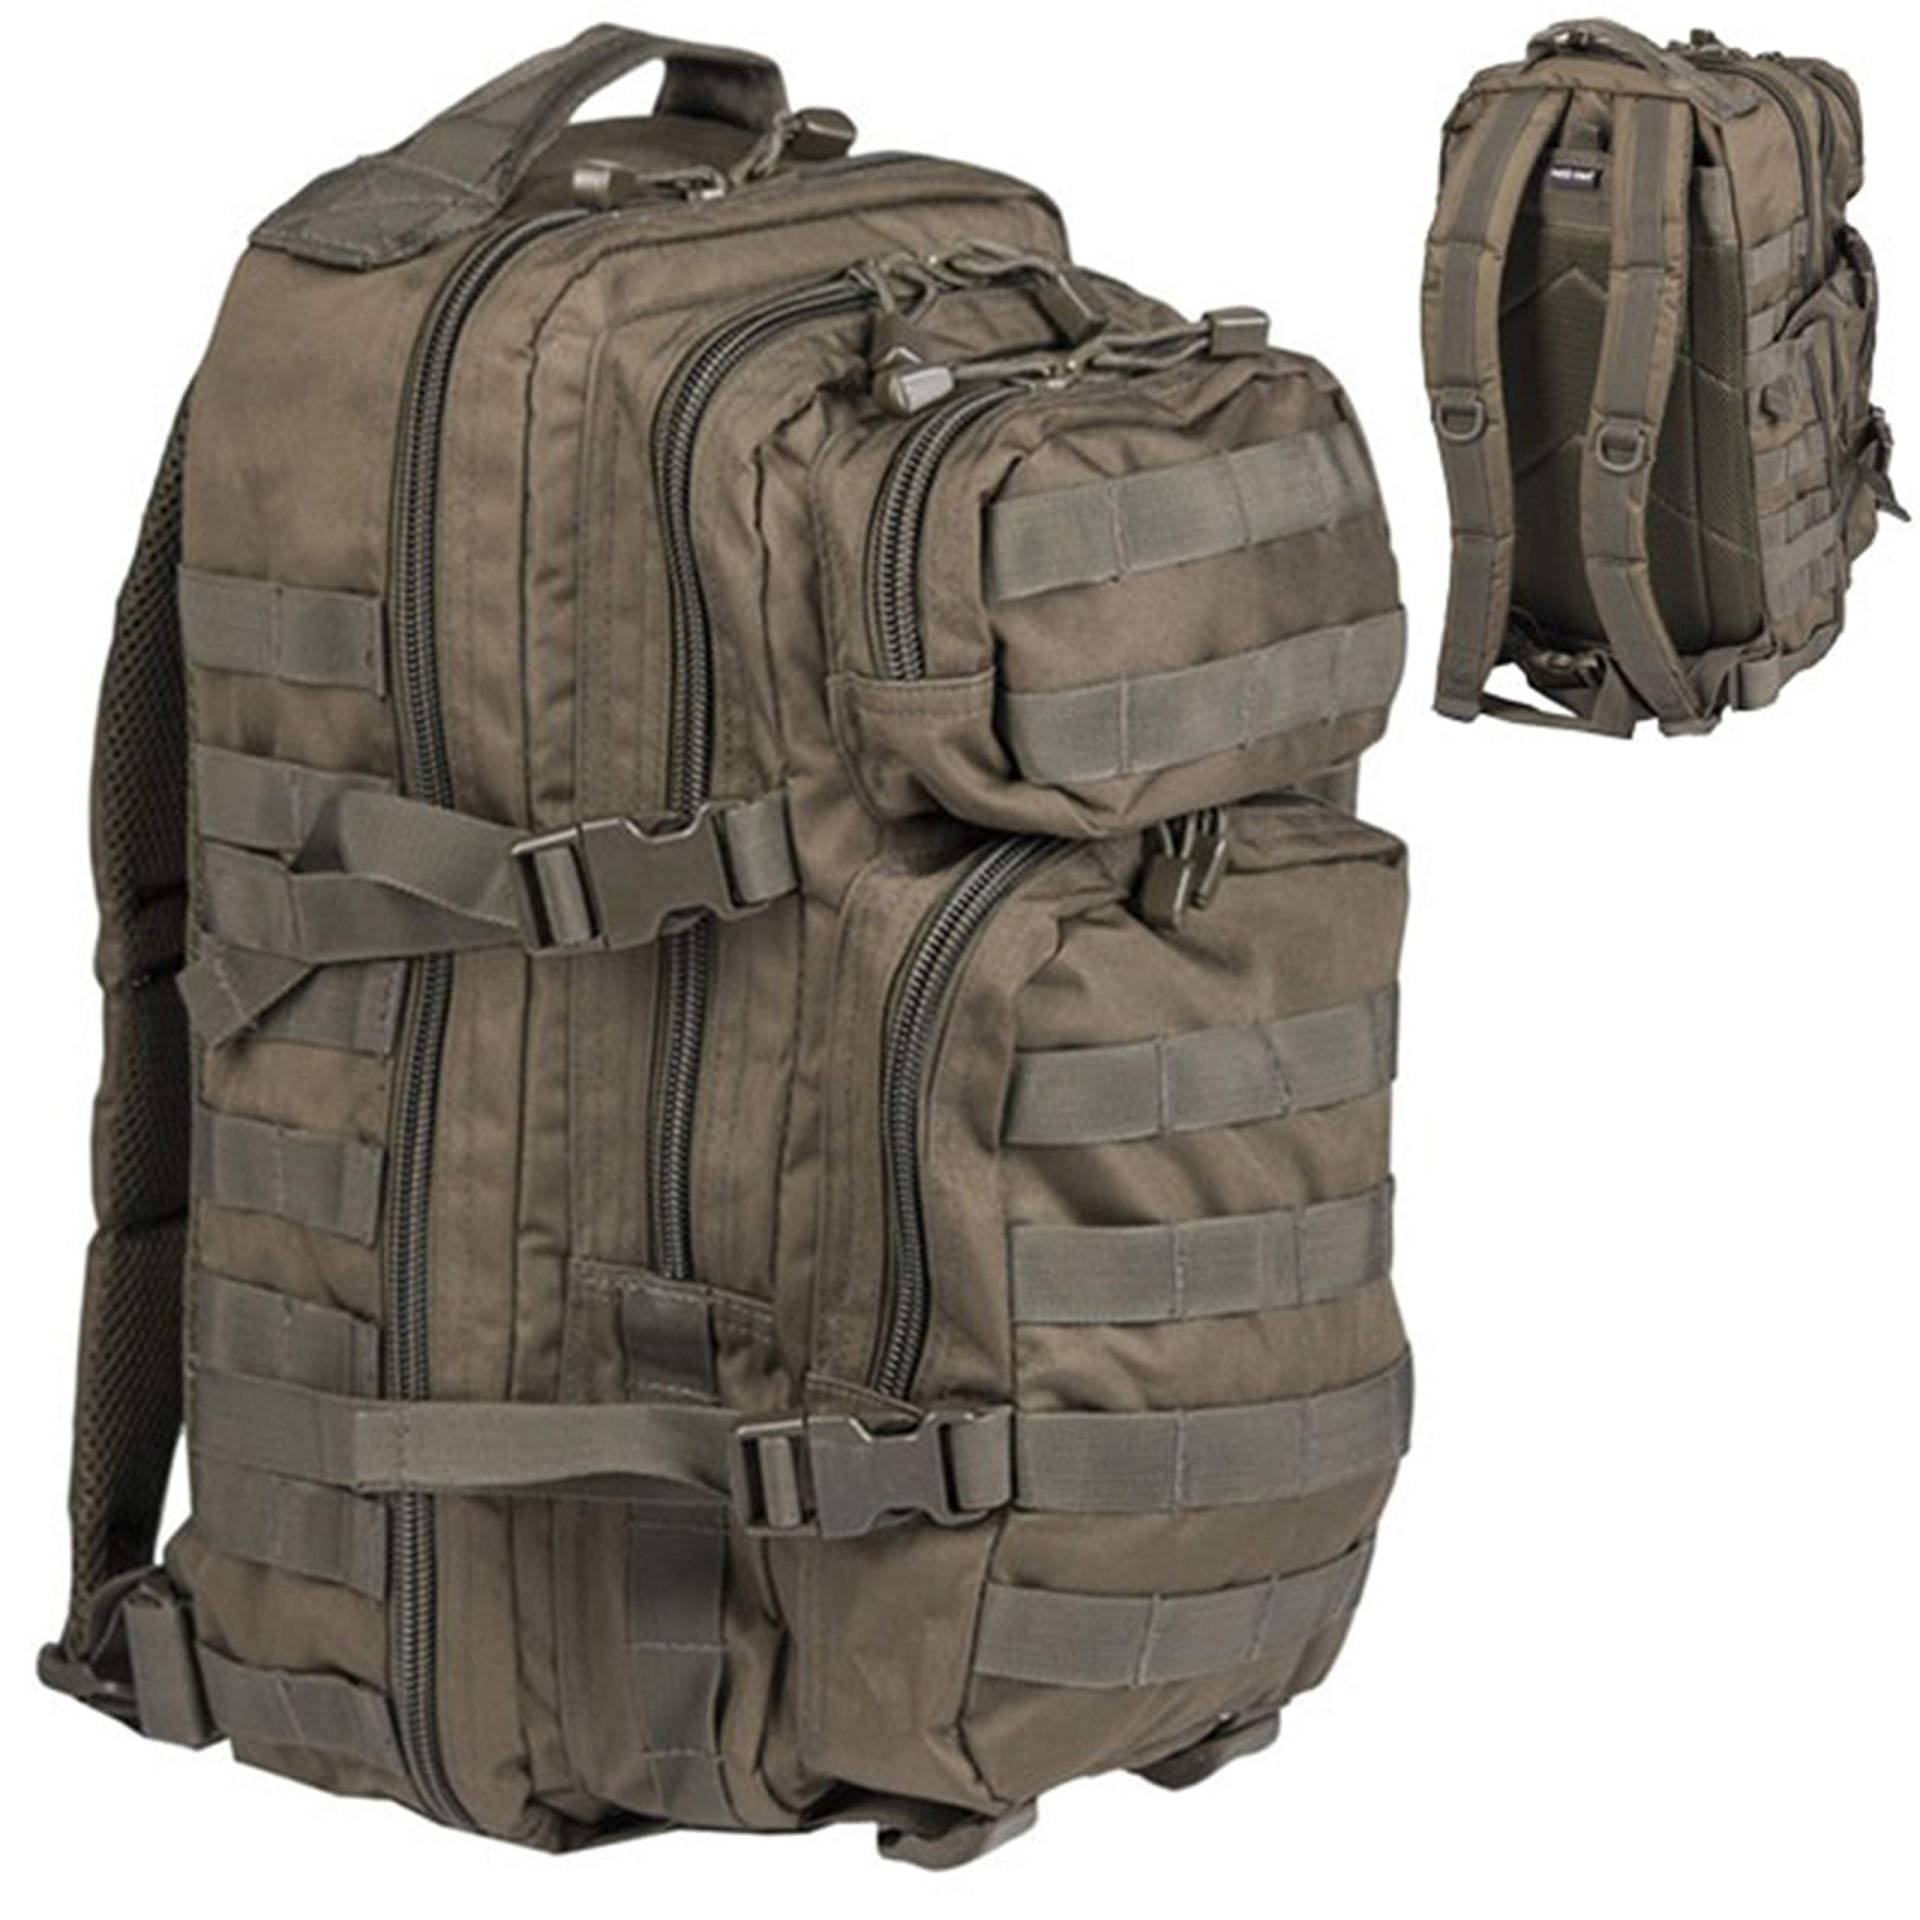 Rucksack US Assault Pack 20l Oliv Tactical Kommando KSK Army Ausrüstung #16068 von Copytec